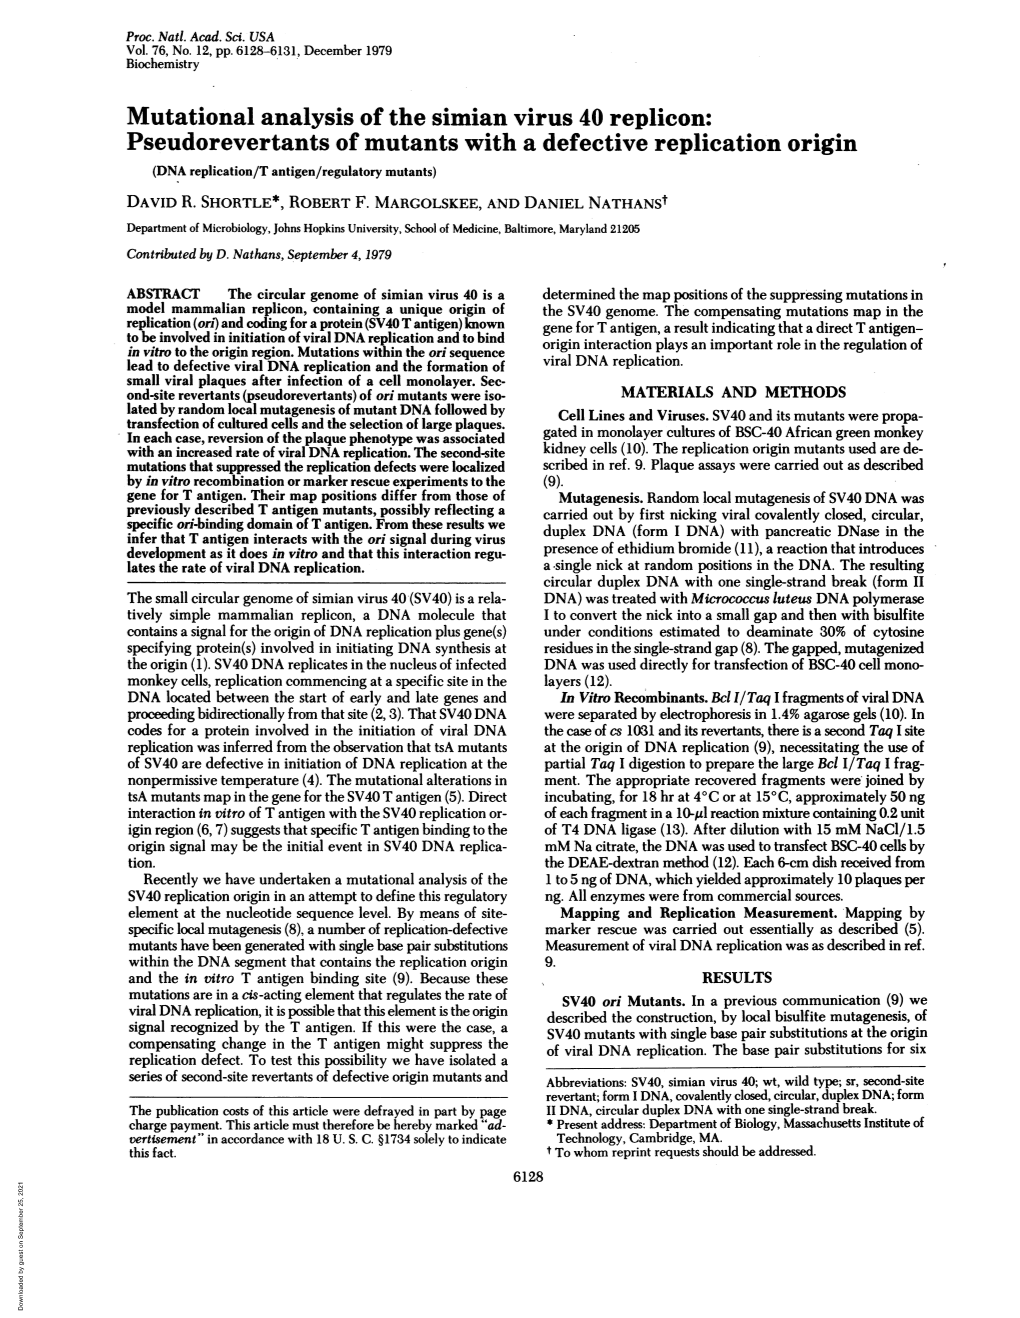 Pseudorevertants of Mutants with a Defective Replication Origin (DNA Replication/T Antigen/Regulatory Mutants) DAVID R